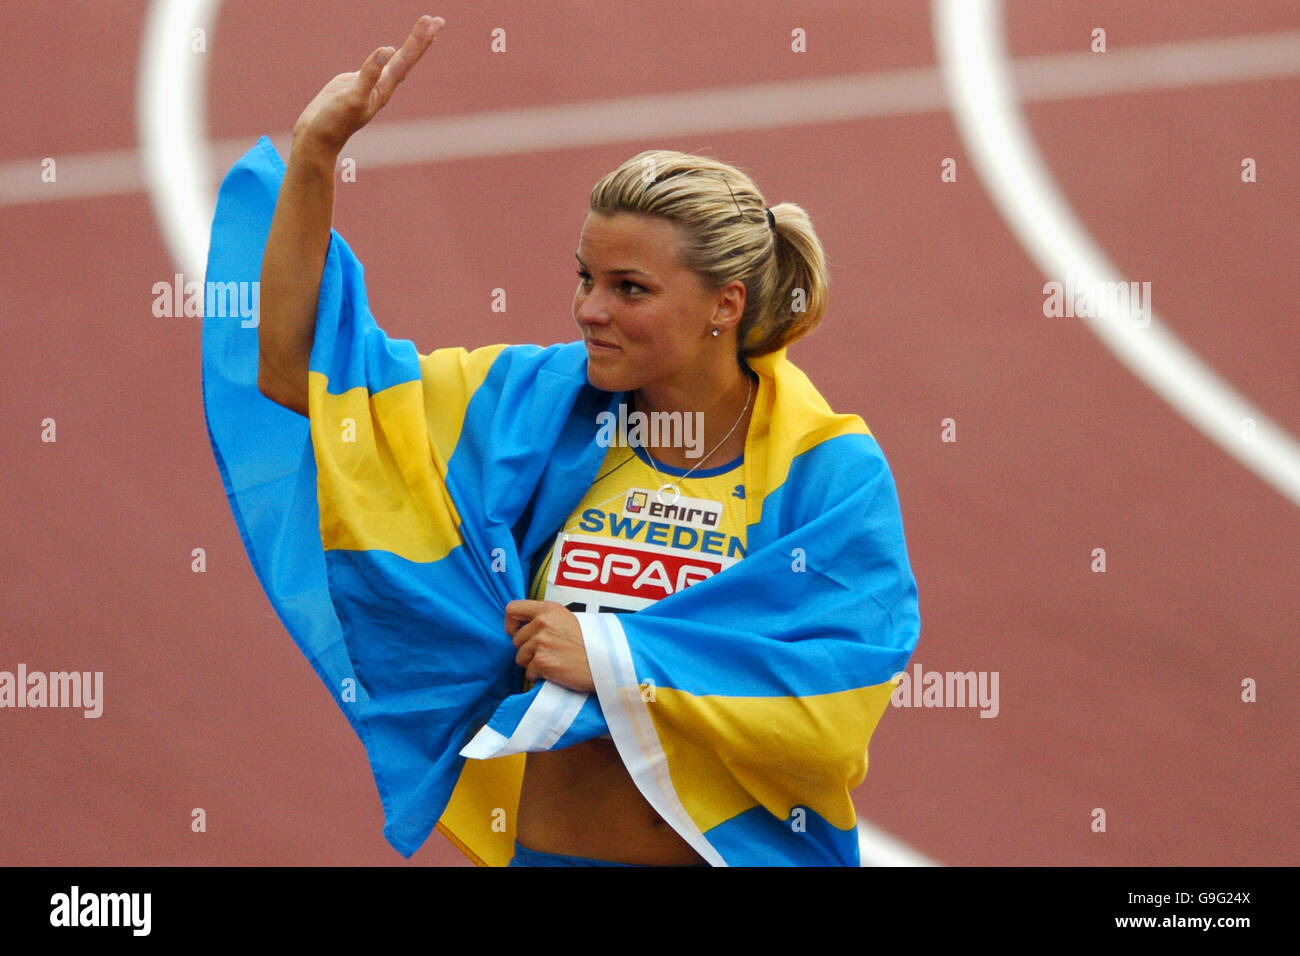 Athletics - European Athletics Championships 2006 - Ullevi Stadium. Sweden's Susanna Kallur celebrates winning the 100m hurdles Stock Photo